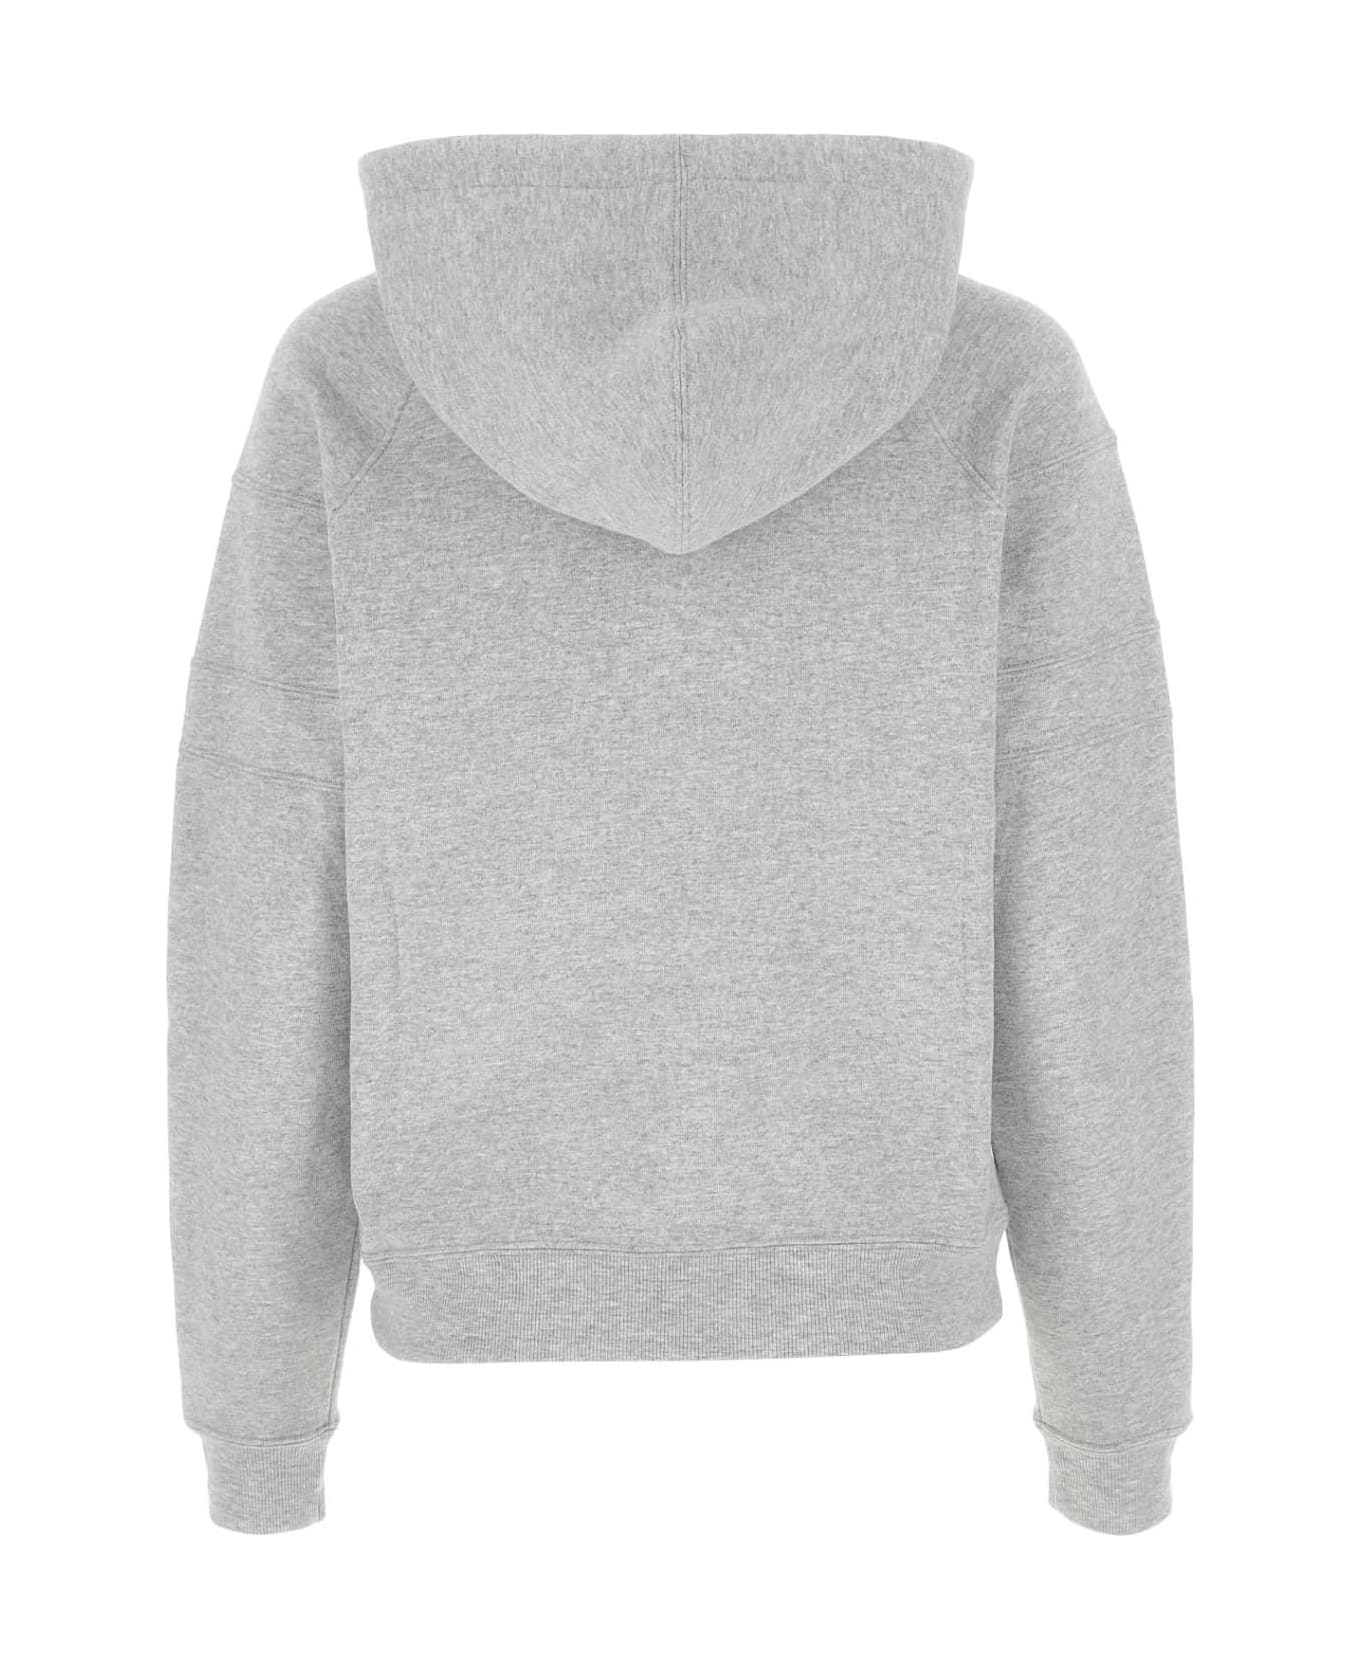 Saint Laurent Grey Cotton Blend Sweatshirt - 1403